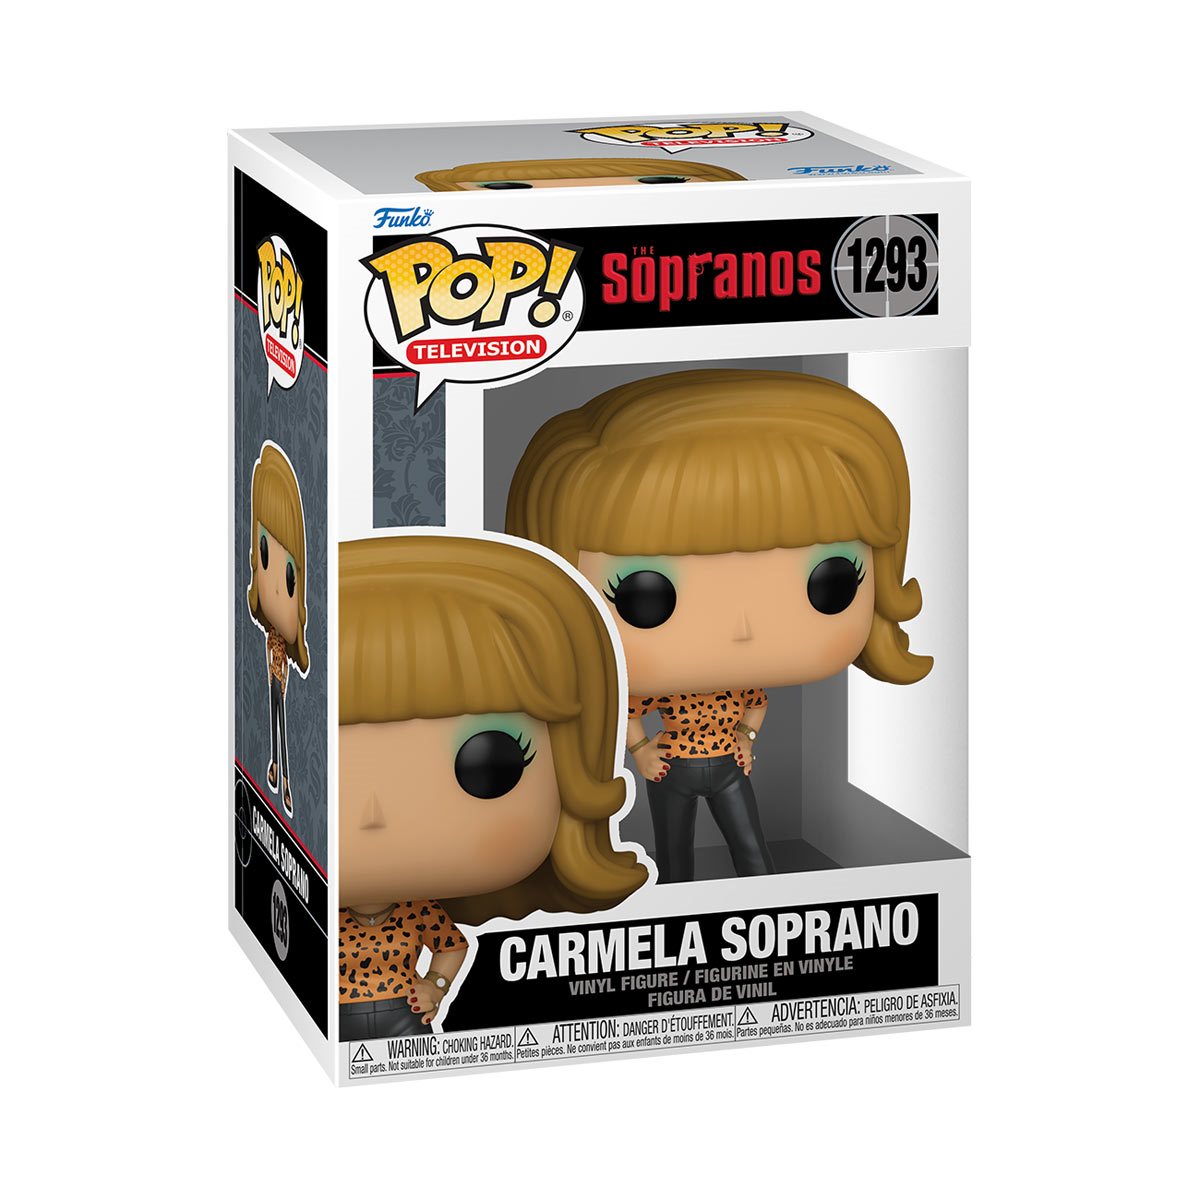 The Sopranos Carmela Soprano #1293 Pop! Vinyl Figure